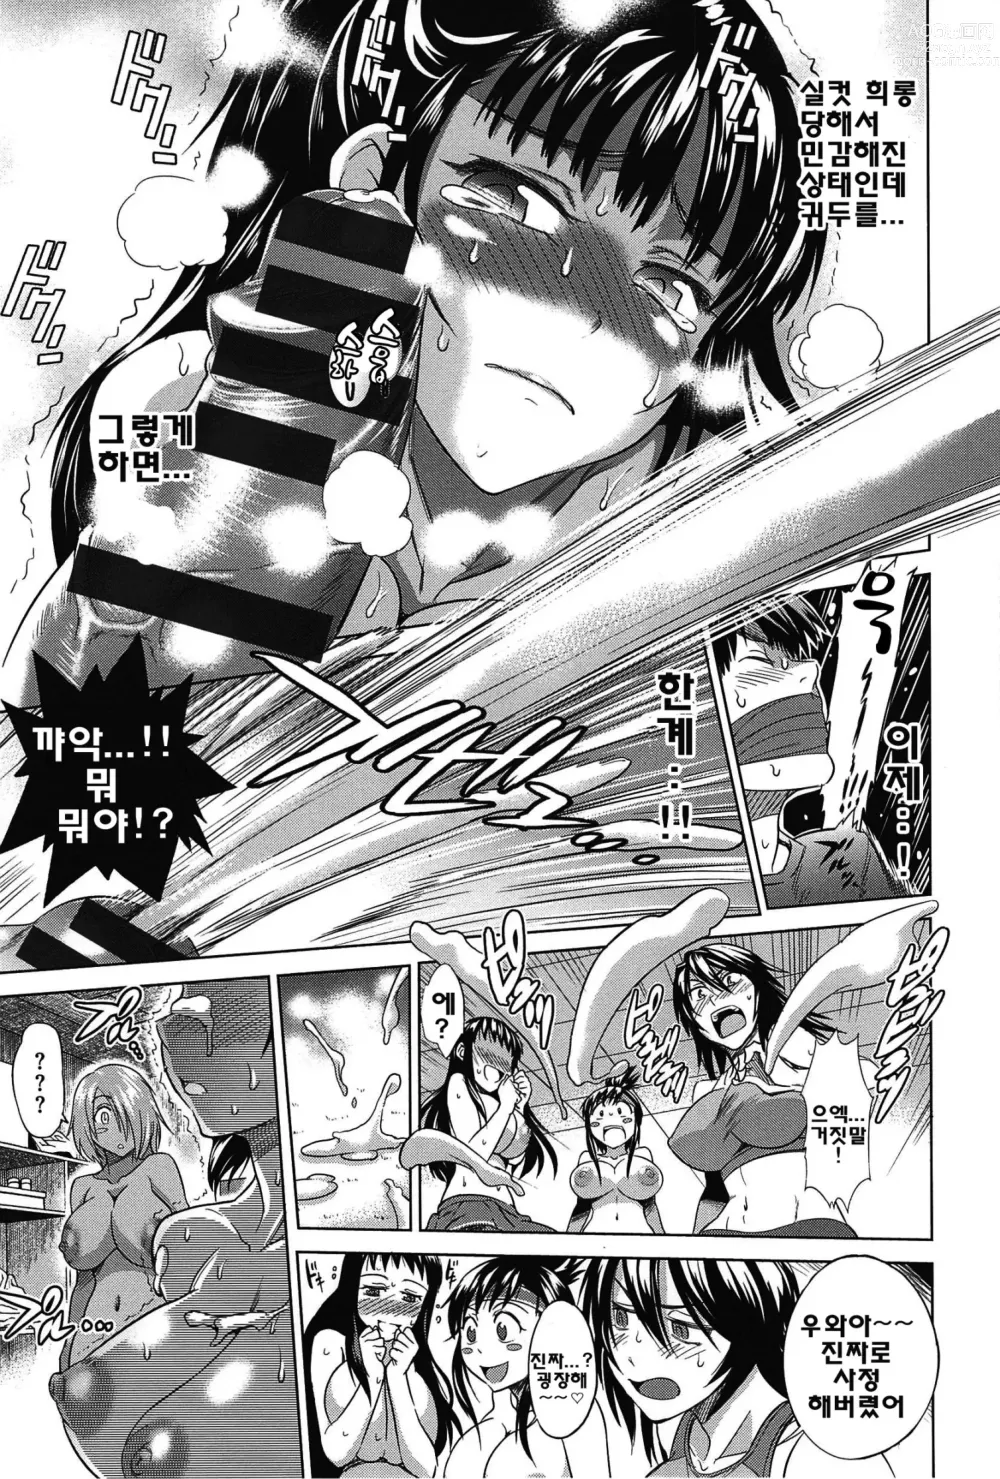 Page 9 of manga Joshi Luck!